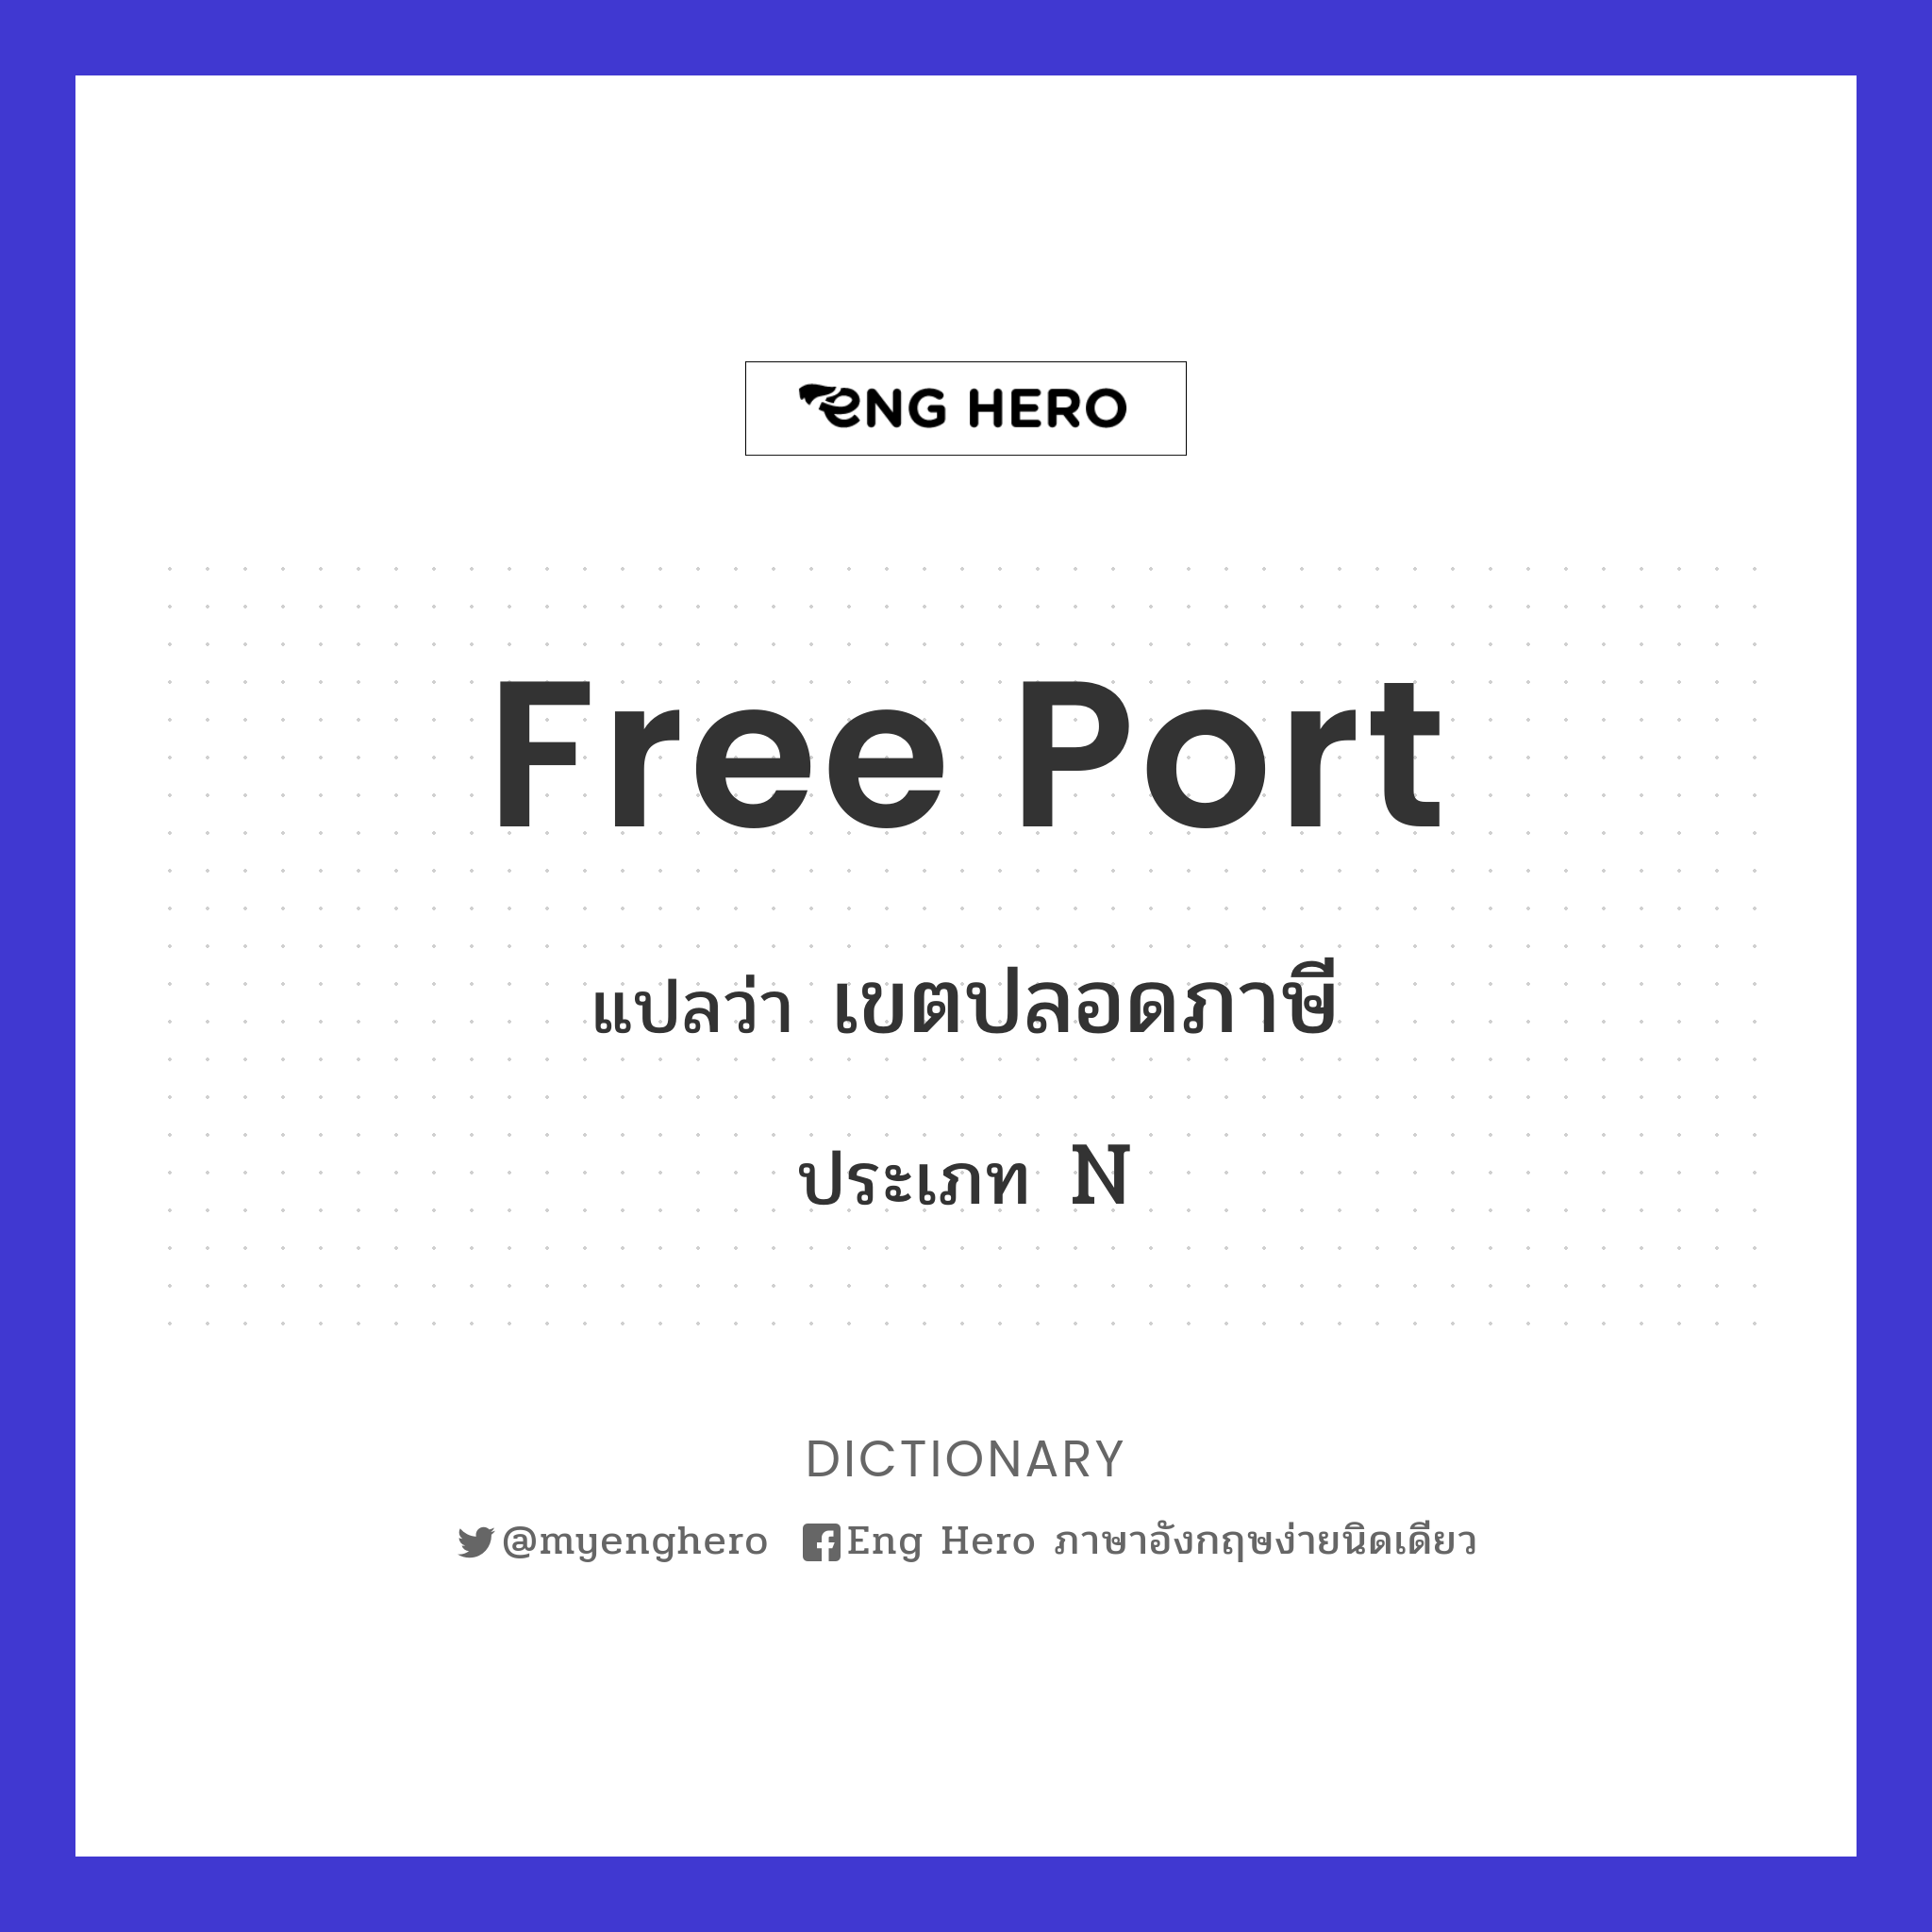 free port